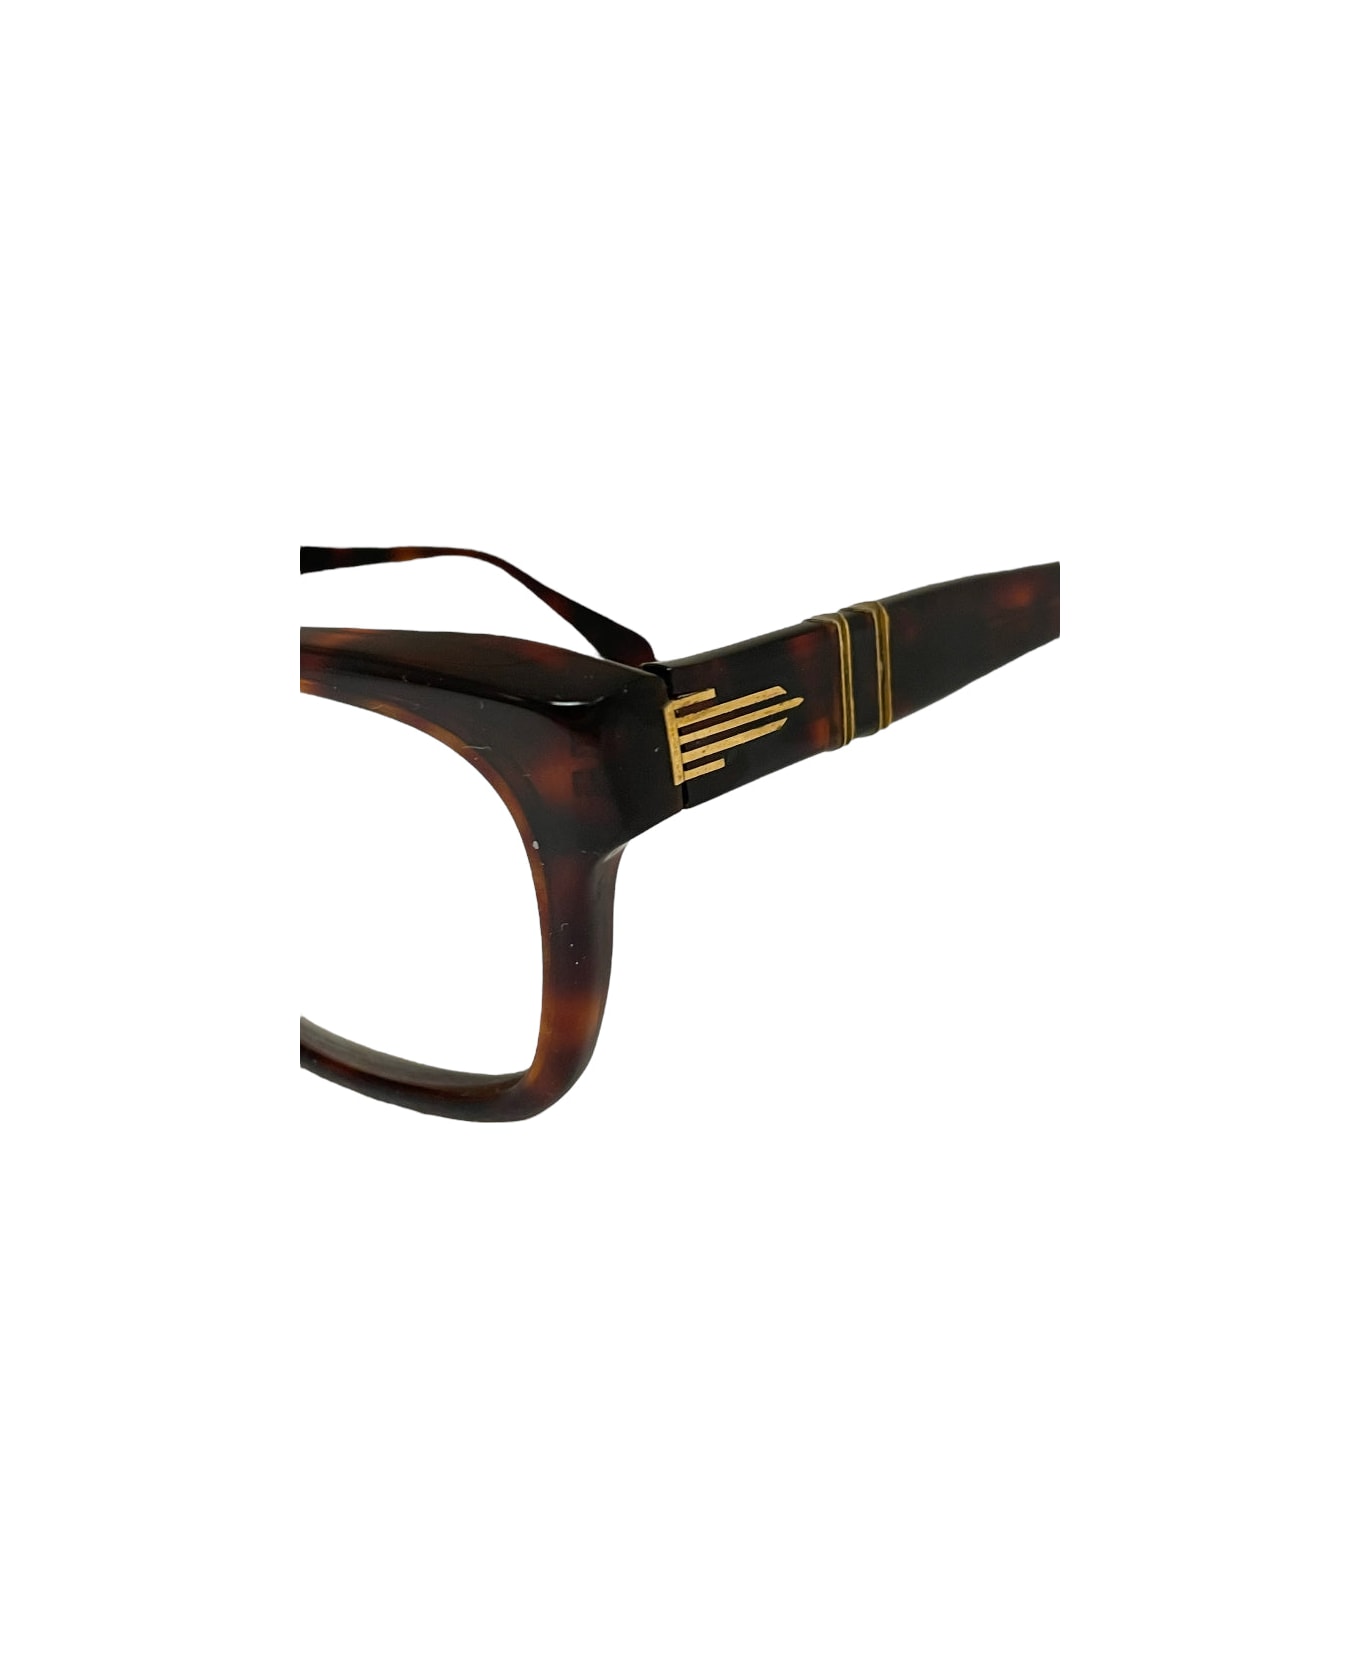 Persol 305 - Havana Sunglasses